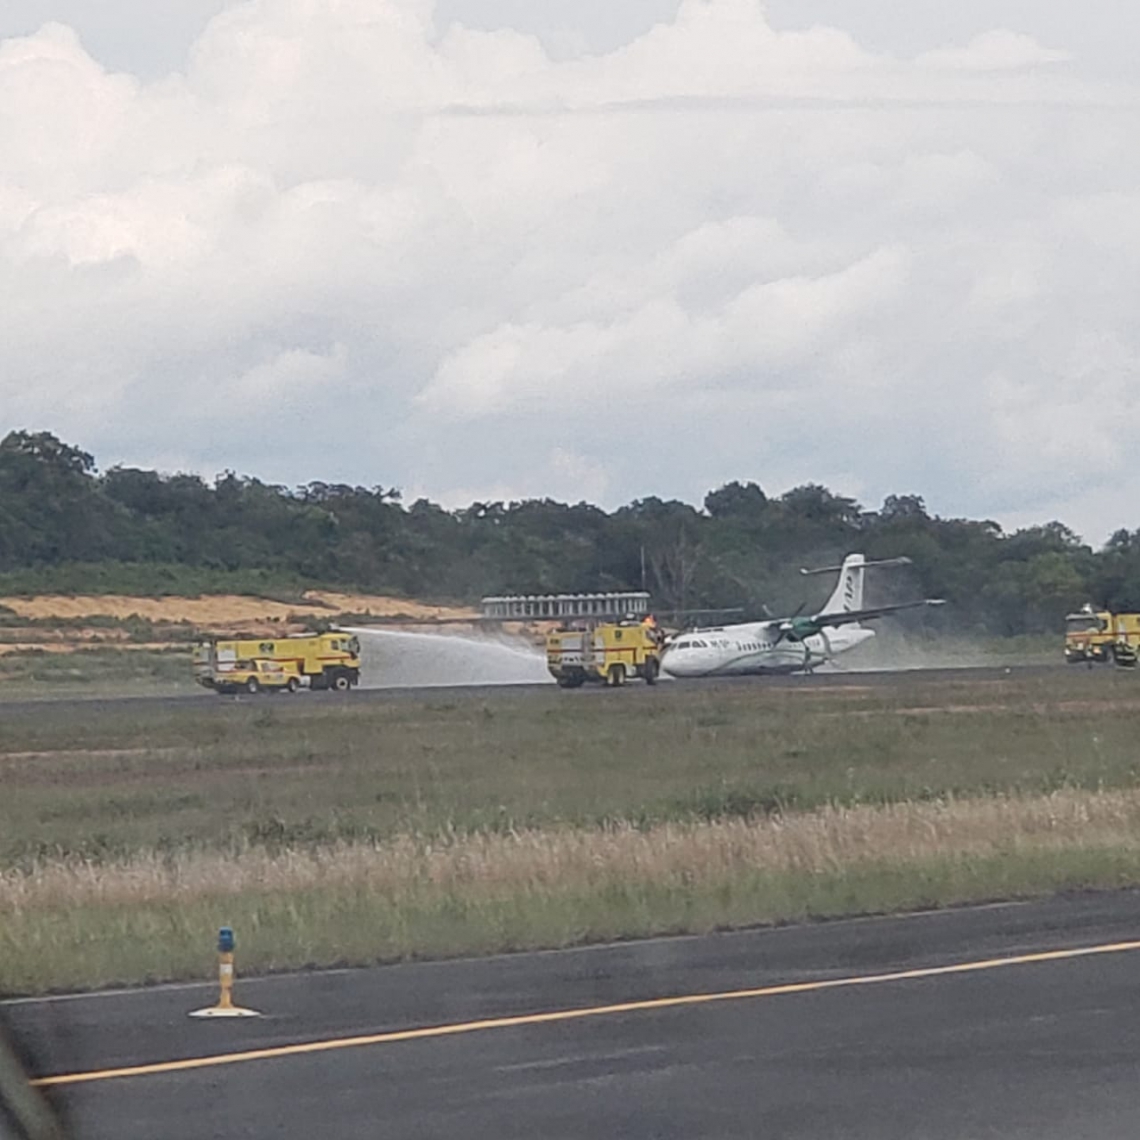 A aeronave seguia para Carauari, cidade do interior de Amazonas, mas teve que retornar ao aeroporto por conta de problemas técnicos